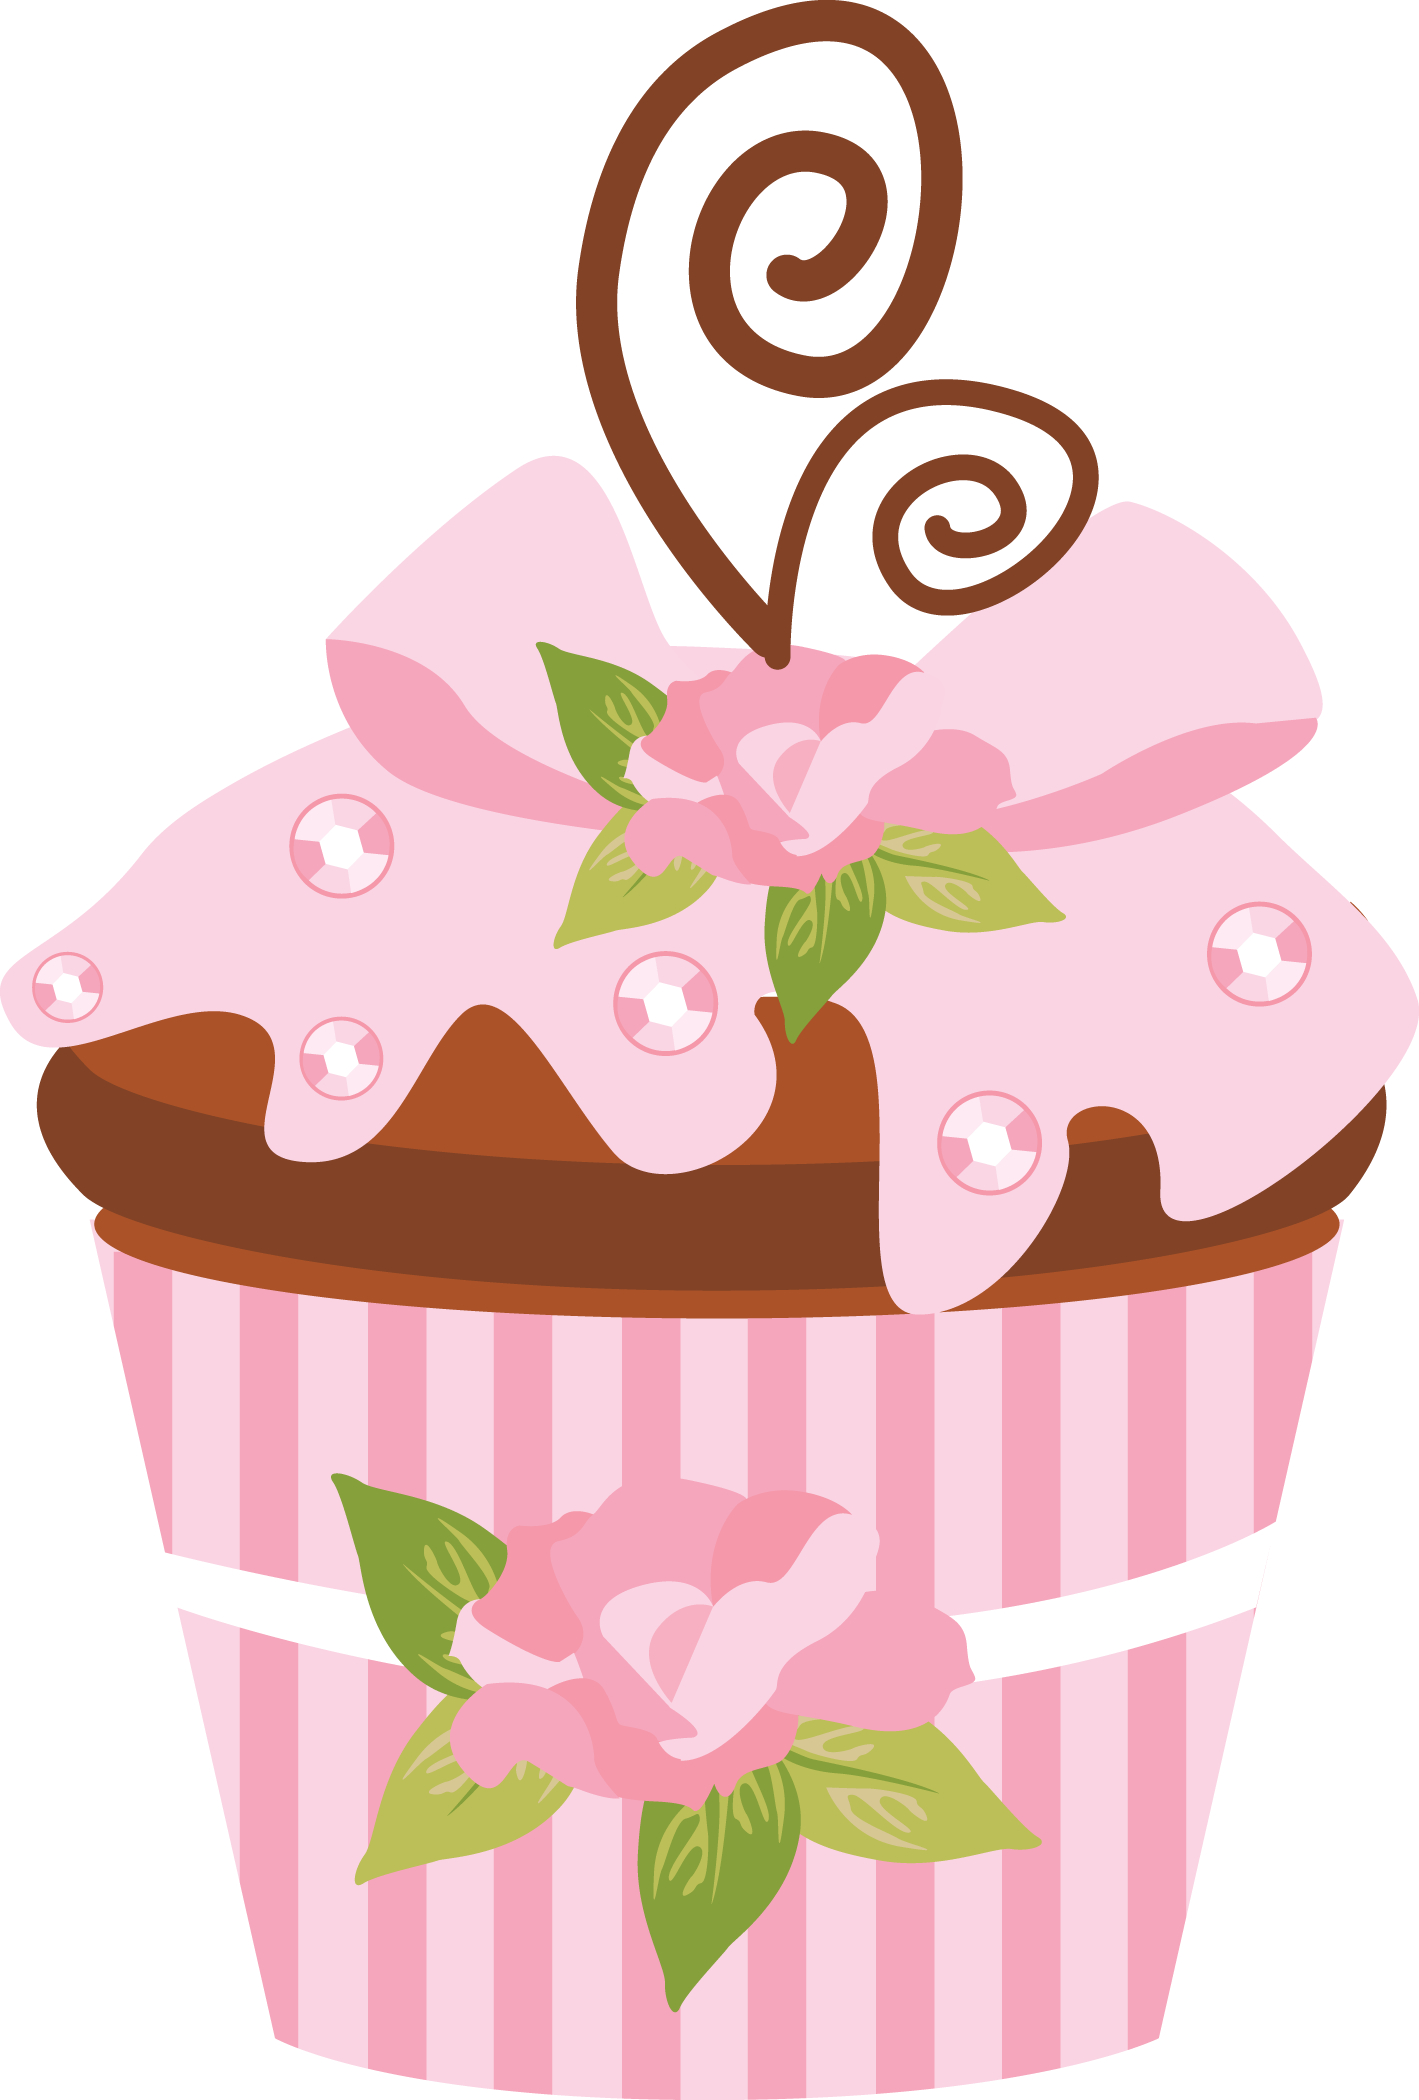 cupcake 1 3